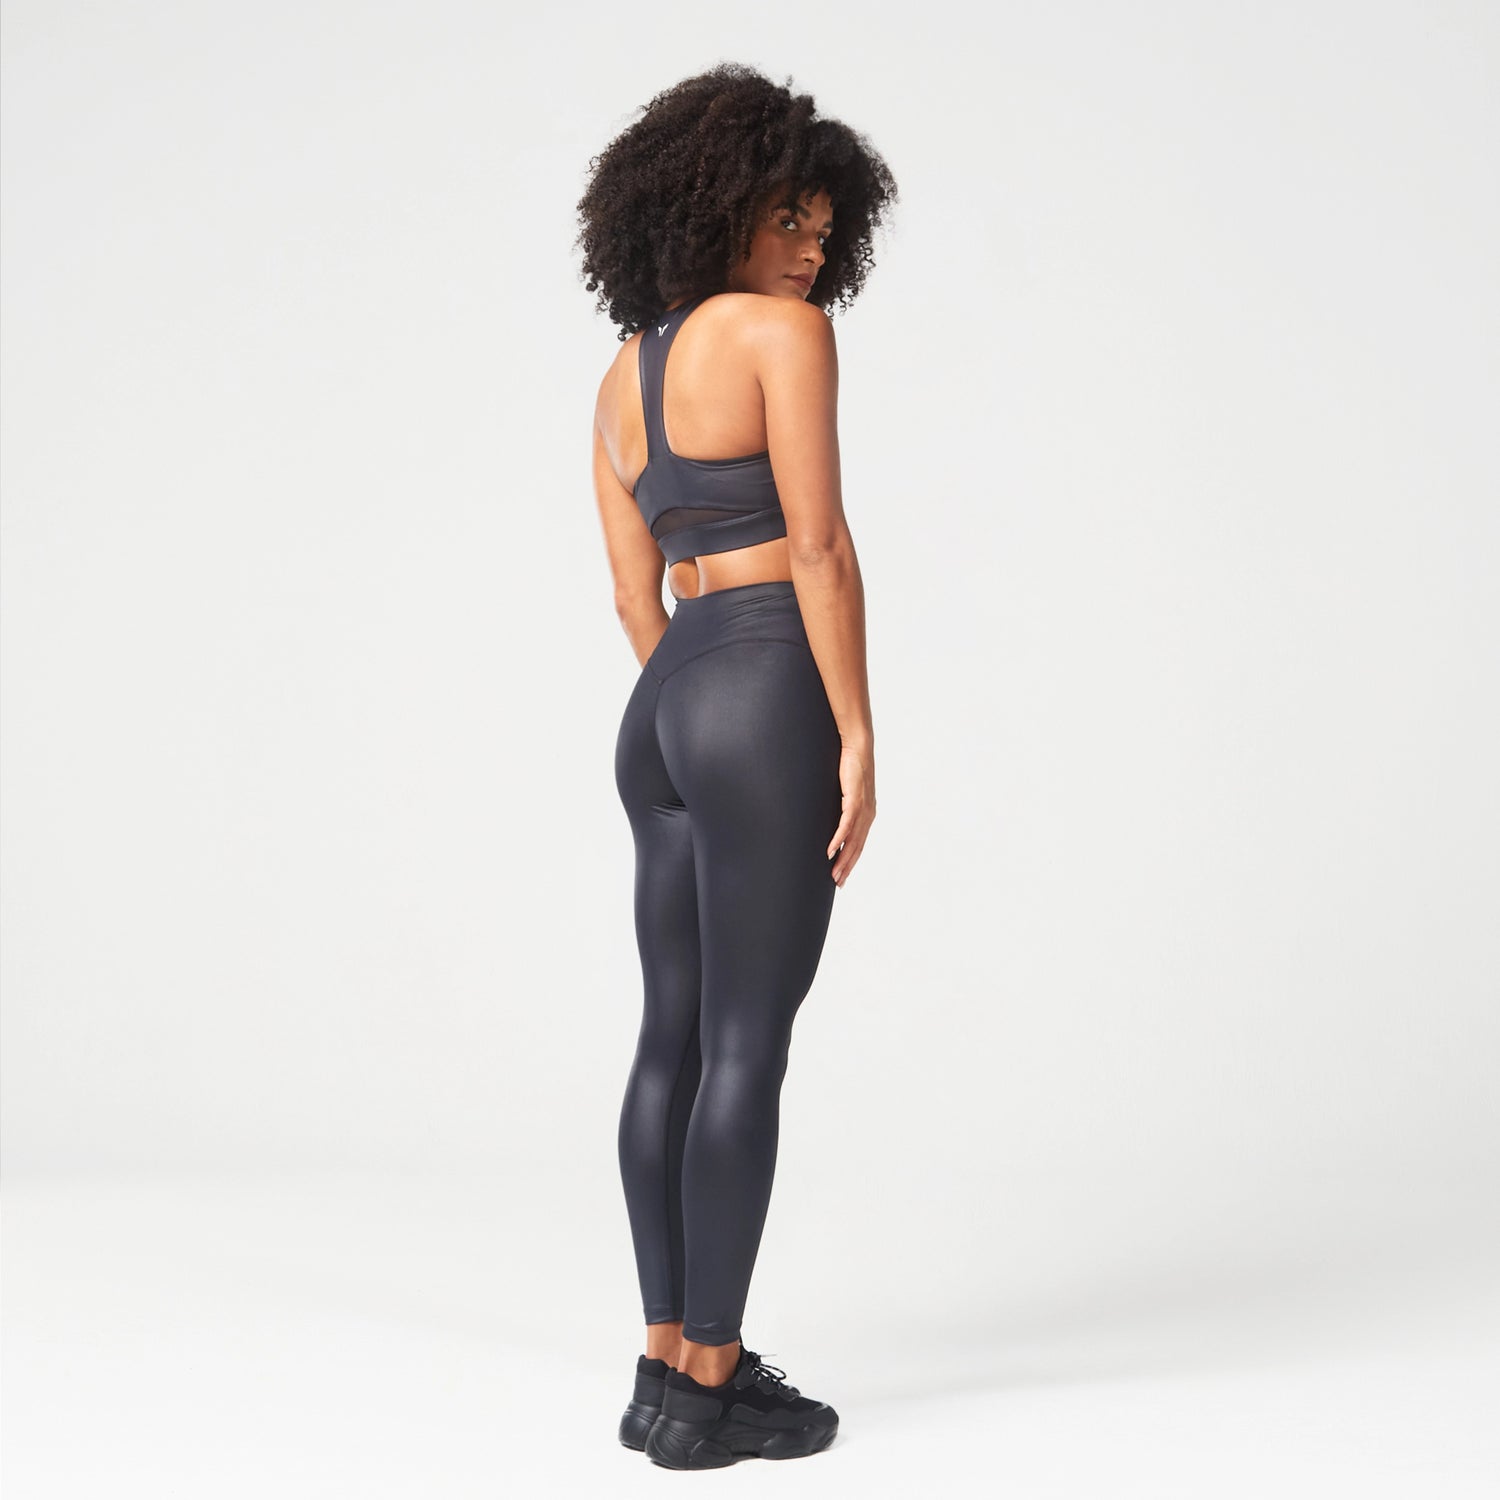 squatwolf-workout-clothes-glaze-leggings-black-gym-leggings-for-women